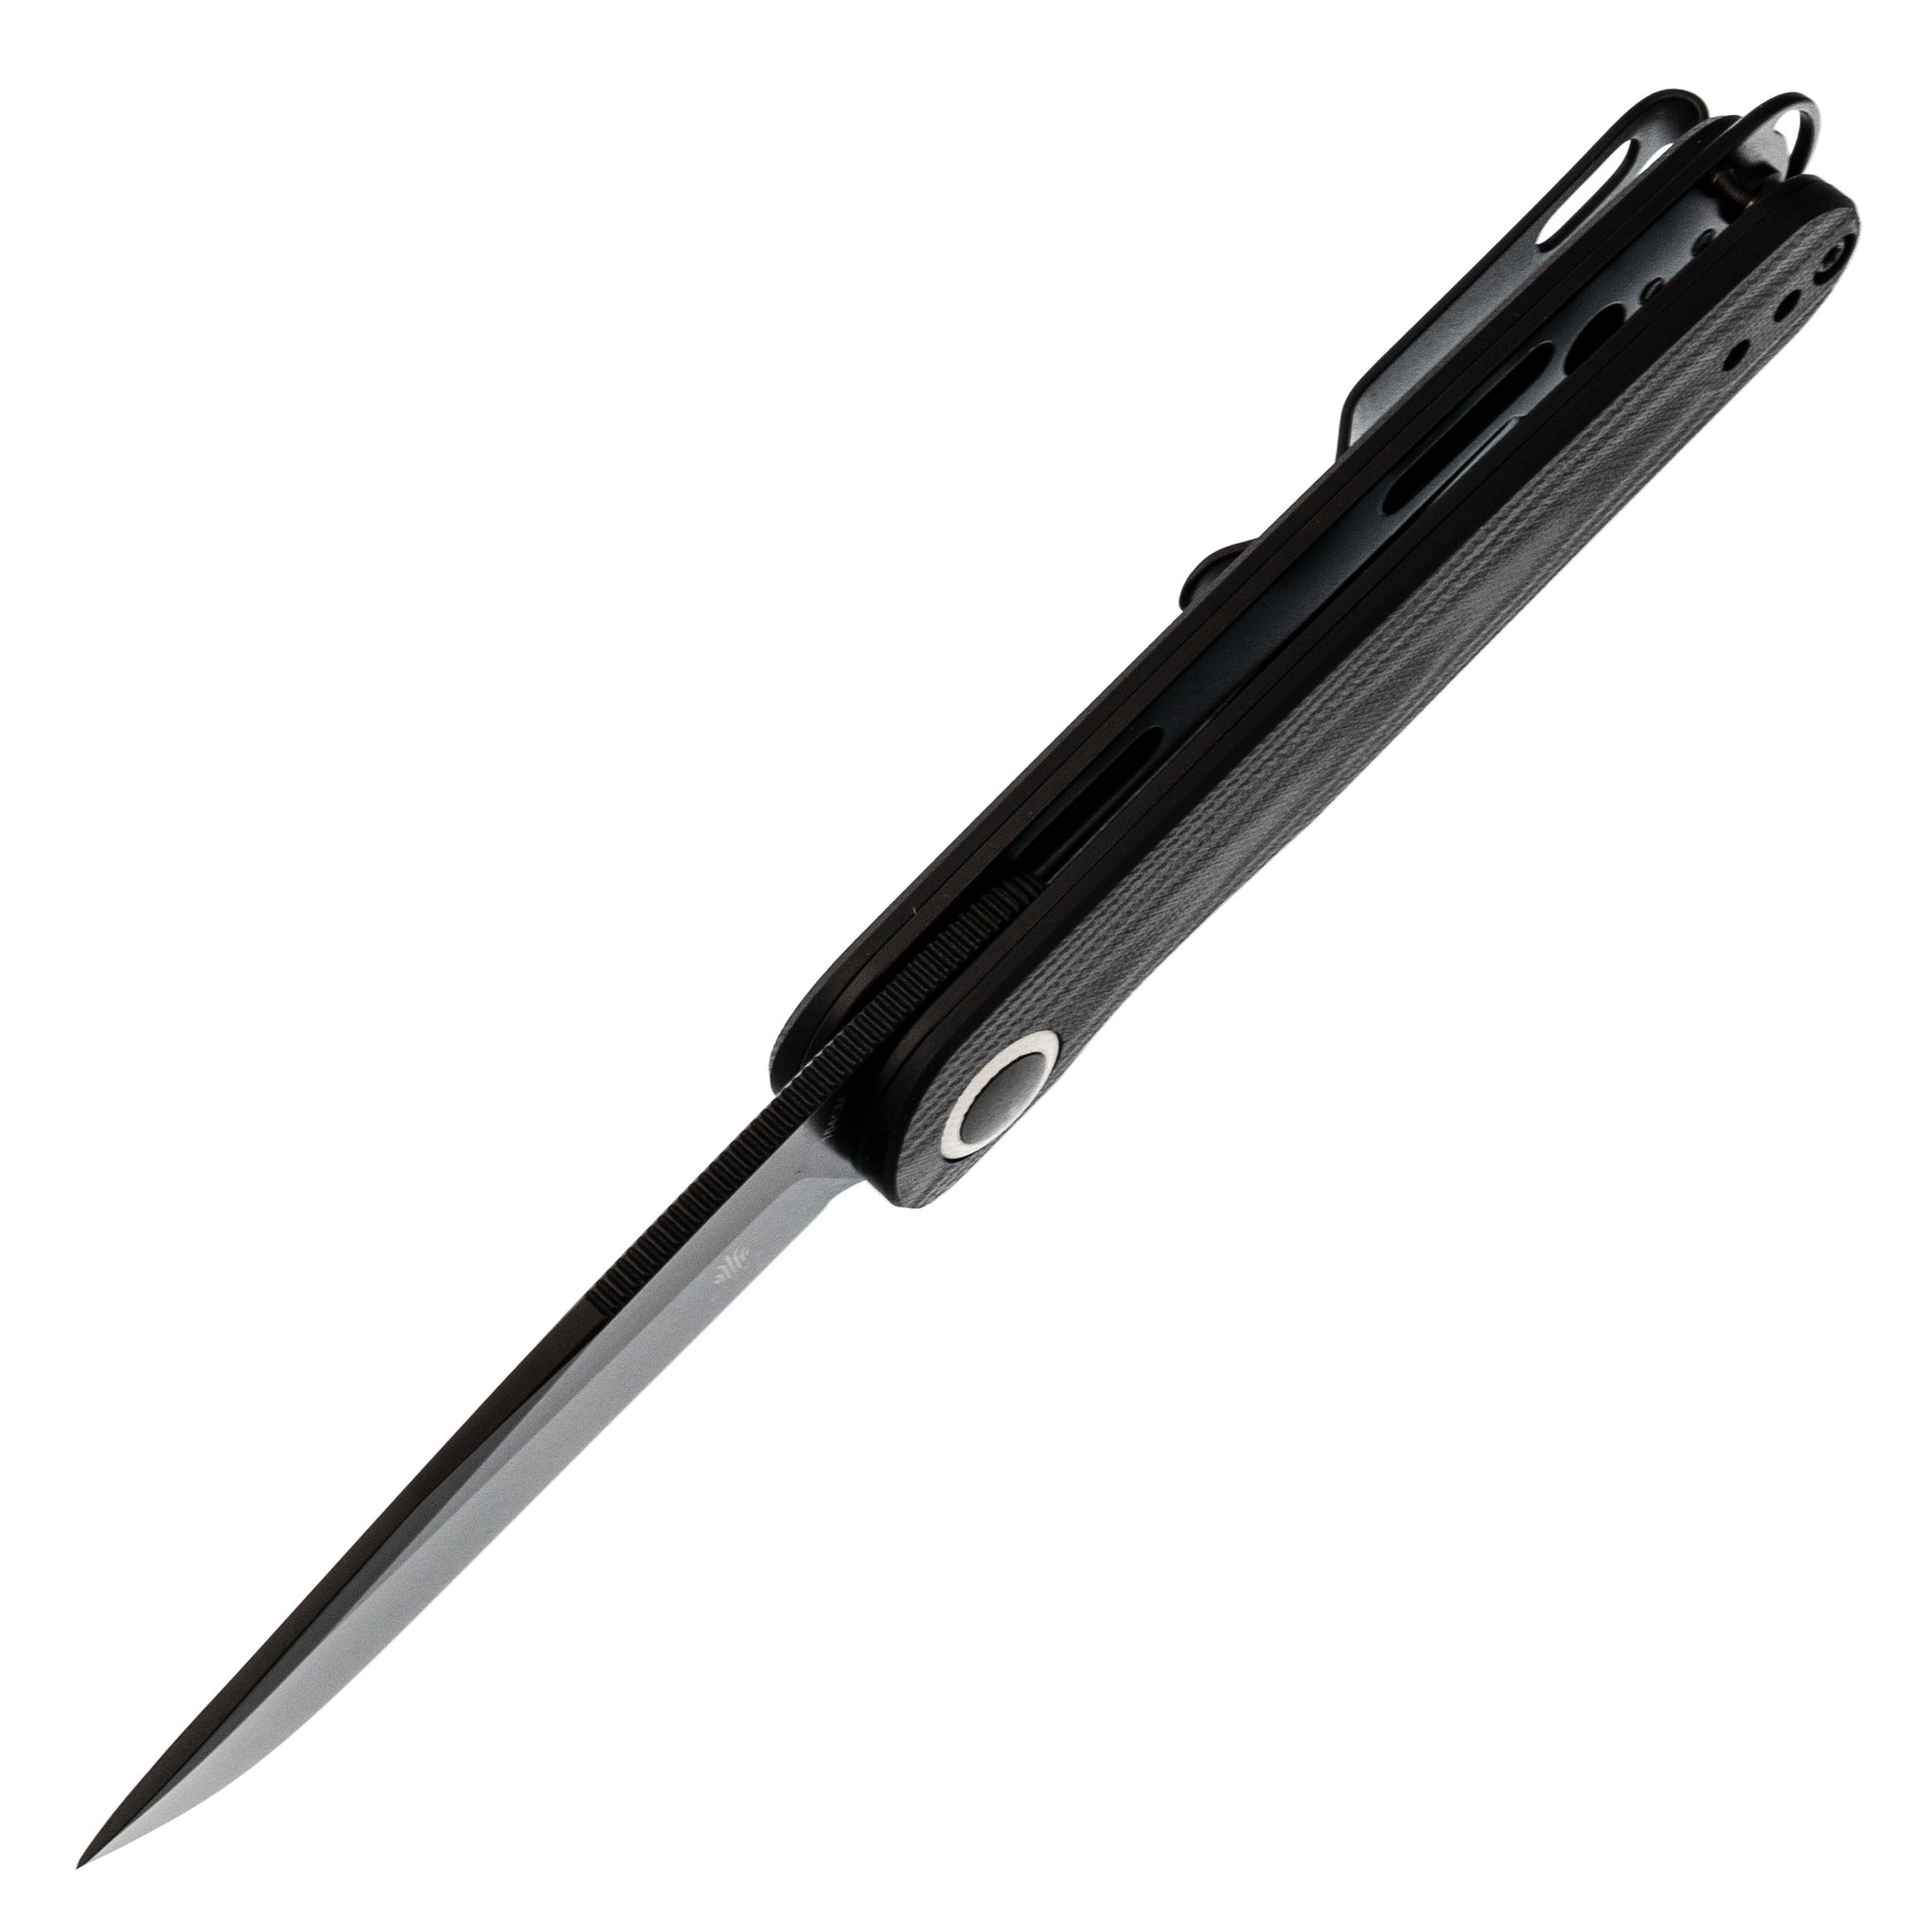 Складной нож Kizer Squidward Black, сталь 154CM, рукоять G10 - фото 2